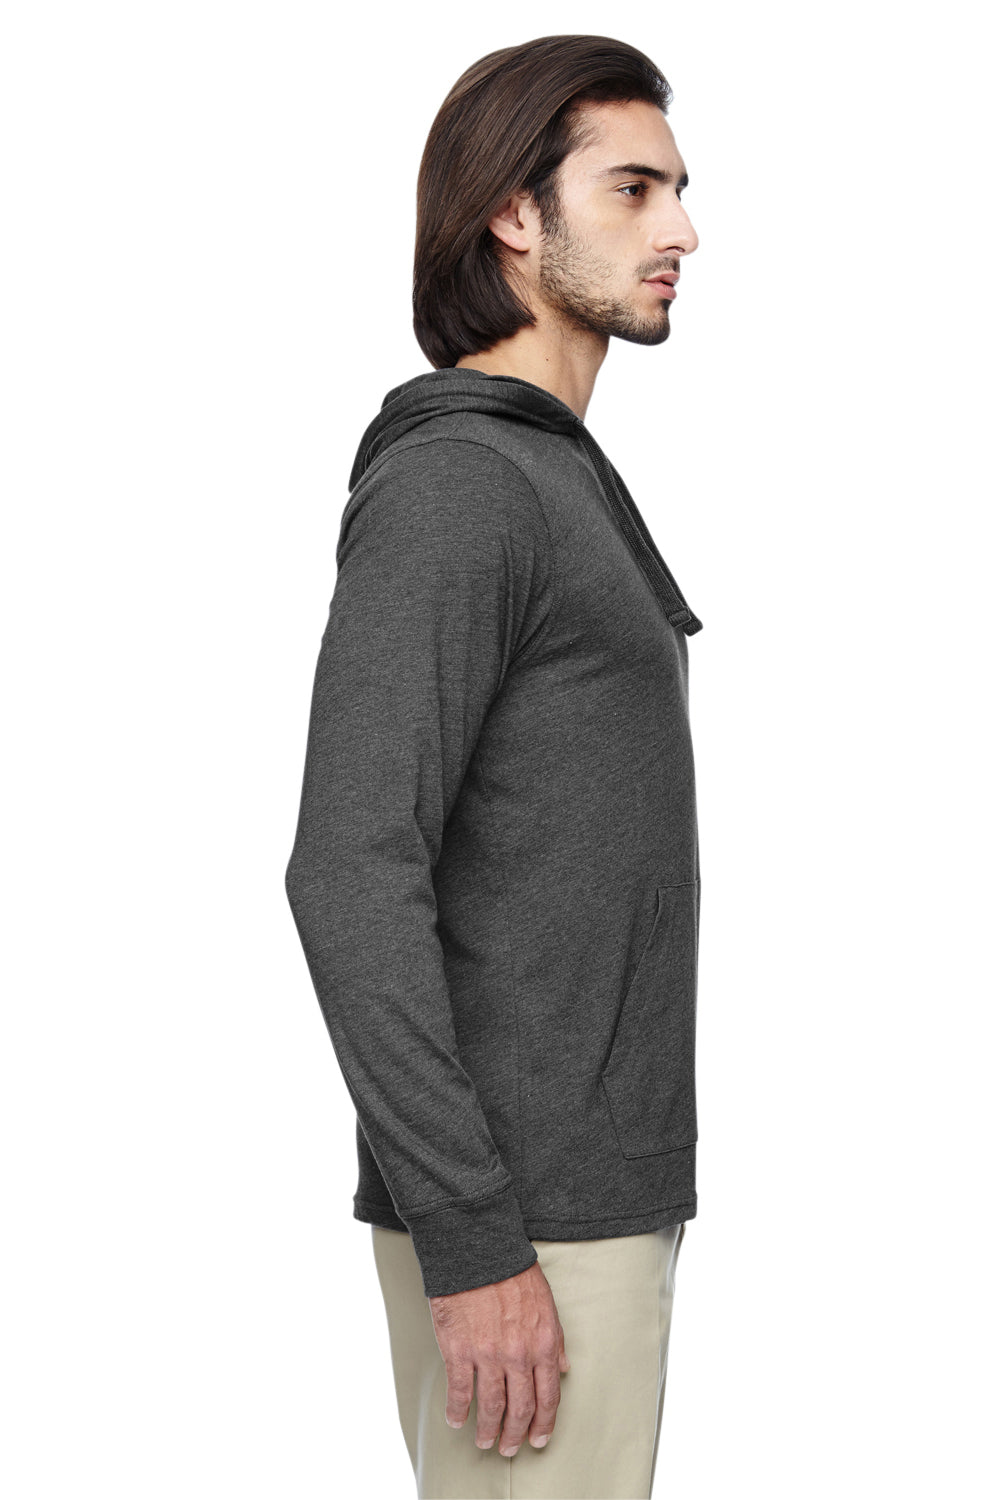 Econscious EC1085 Mens Eco Jersey Hooded Sweatshirt Hoodie Charcoal Grey Side